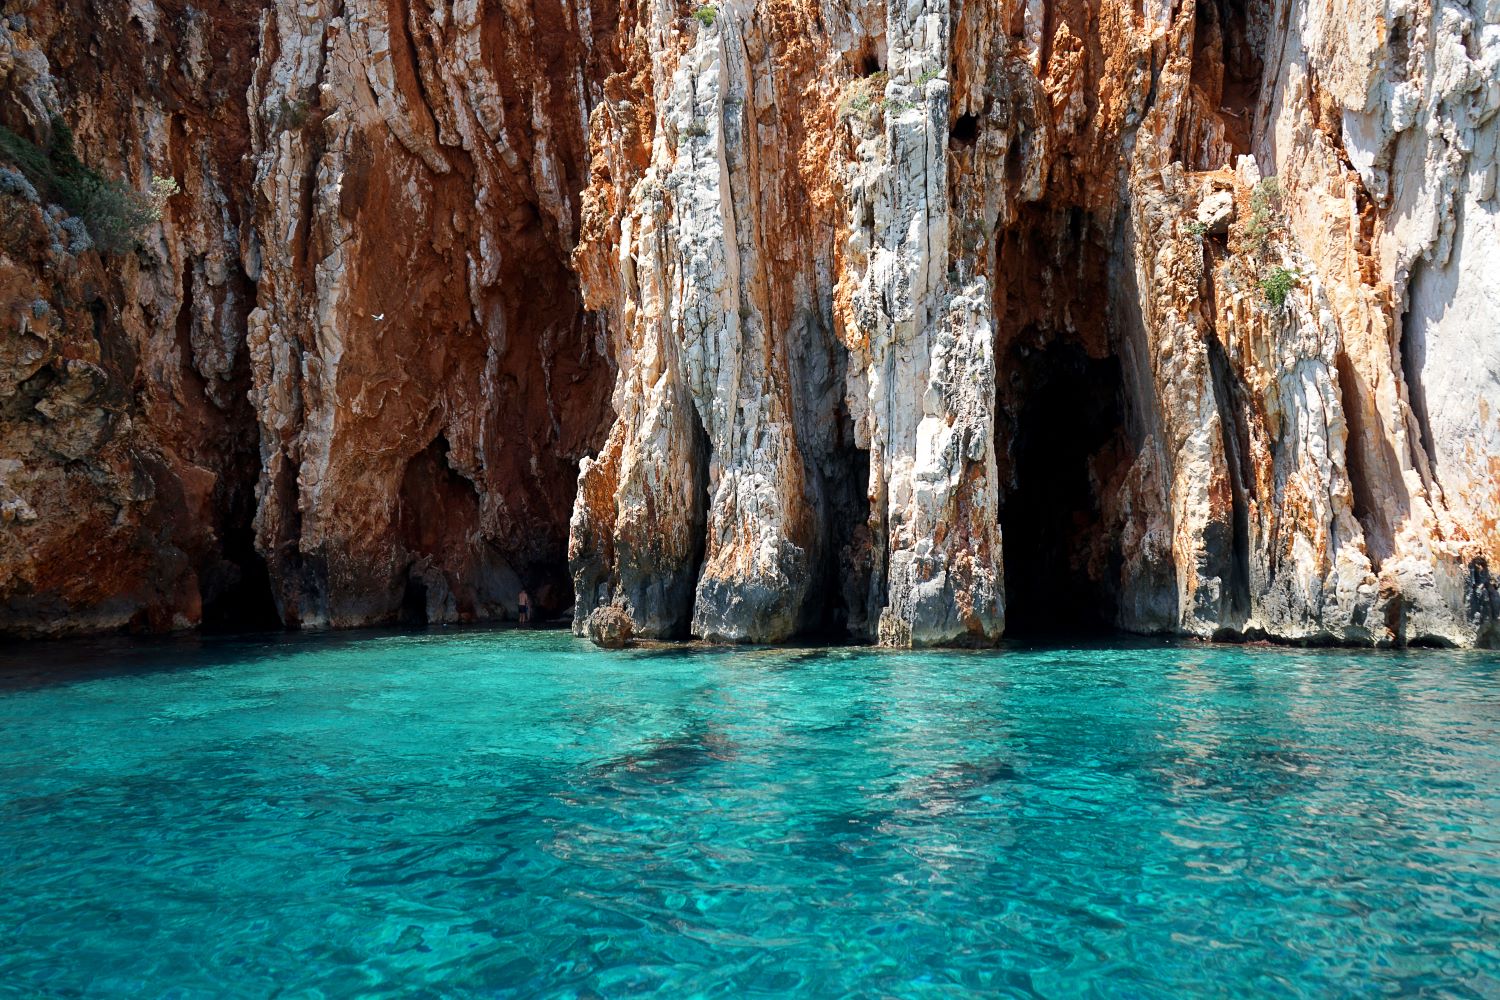 KNMtravel DMC, KNMexclusive, Croatia, Pakleni islands, blue cave